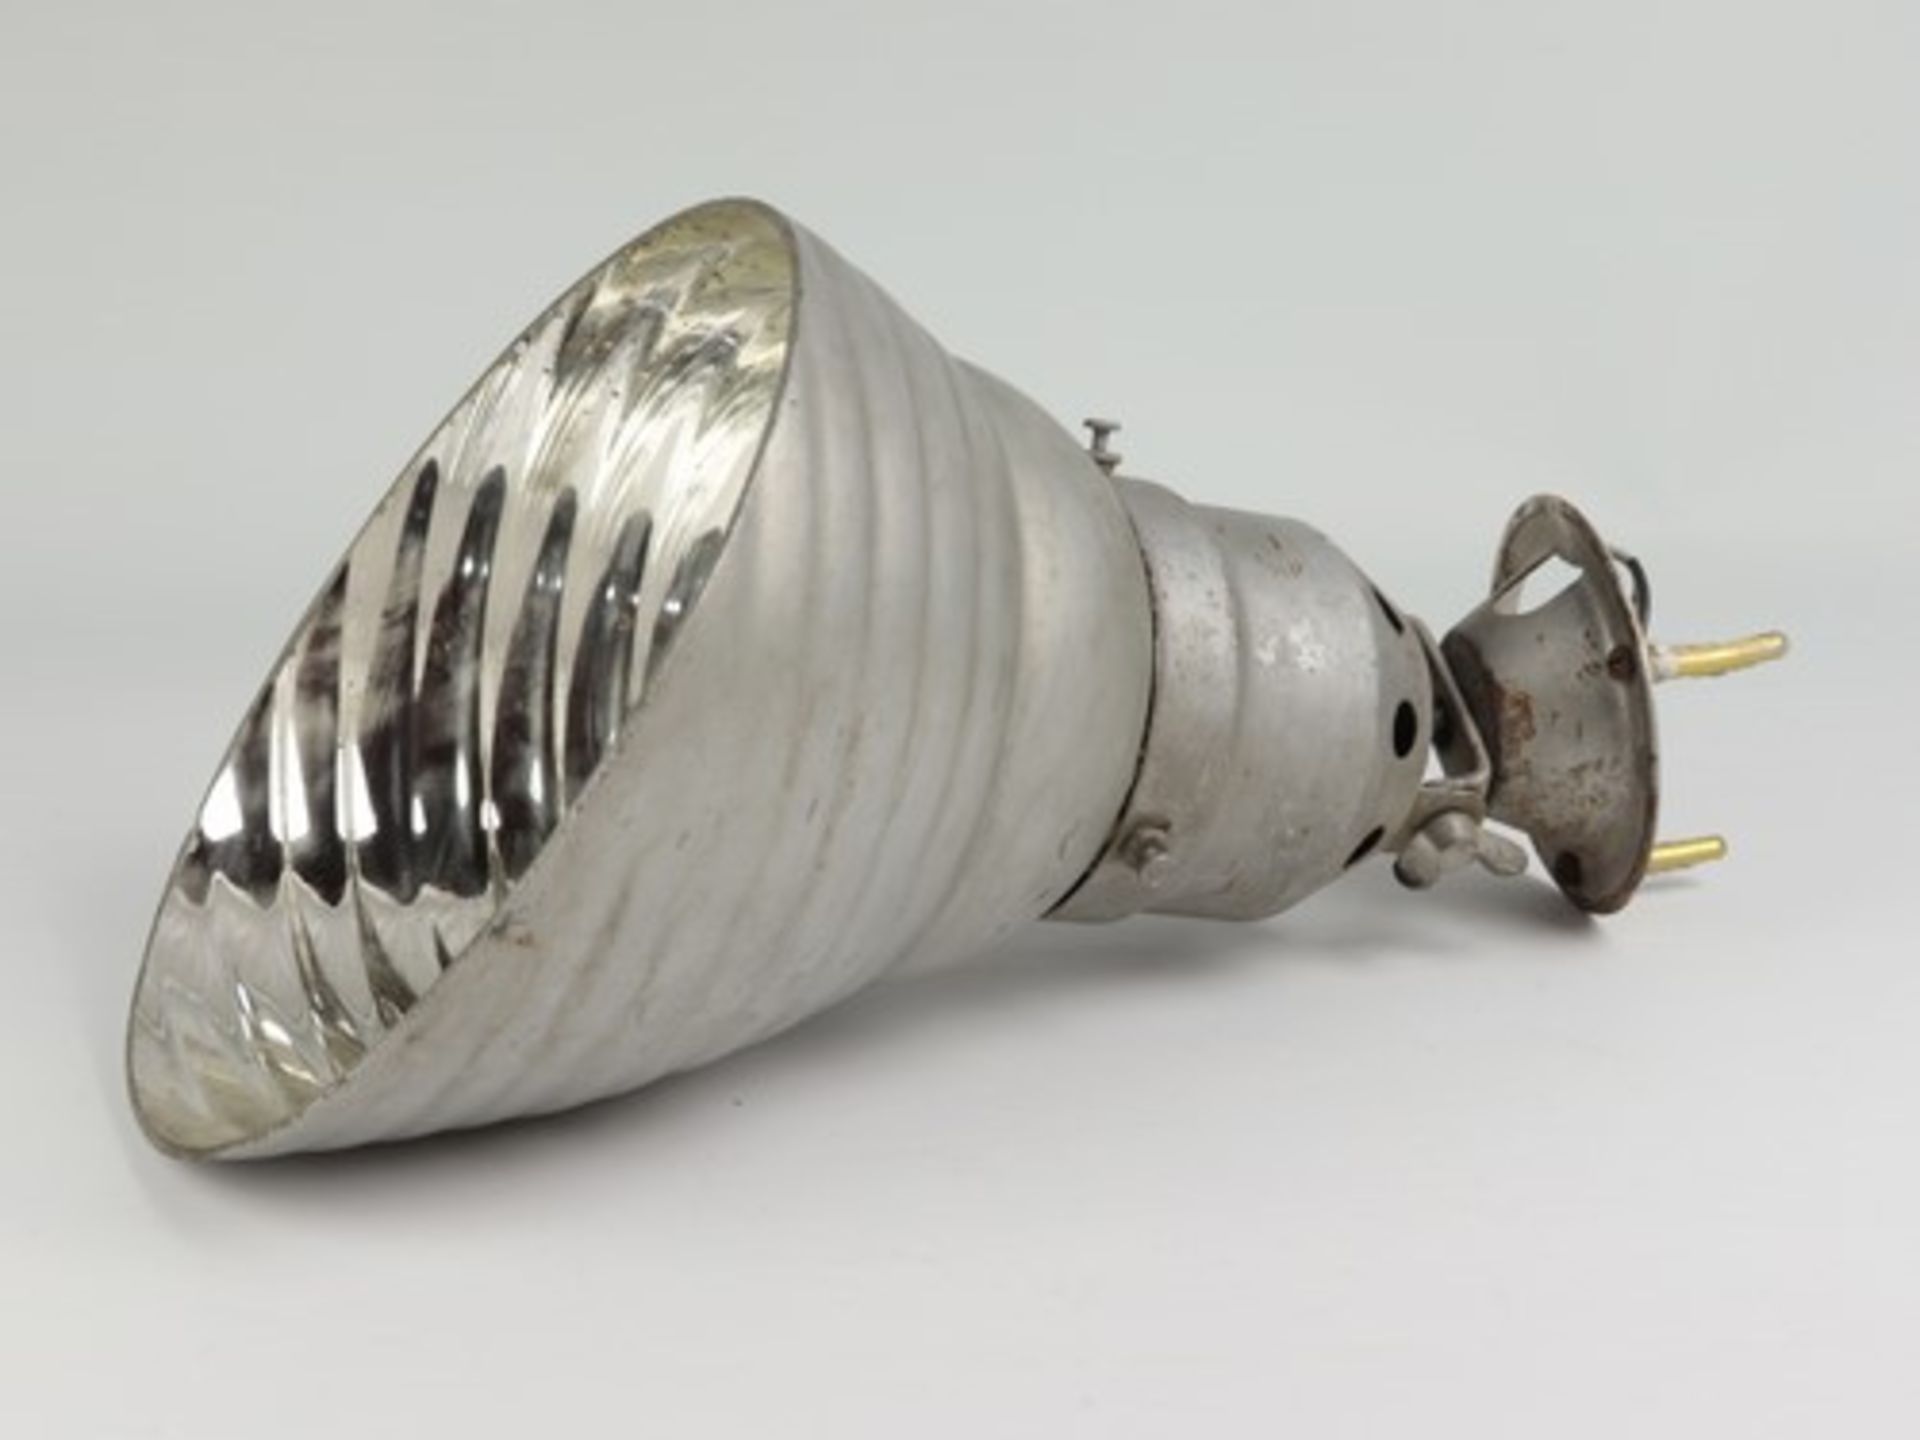 Industrielampe - Zeissum 1930 Berlin, Deckenlampe gem. Zeiss Ikon J.S.5 A8, Metall/Glas, einflammig,